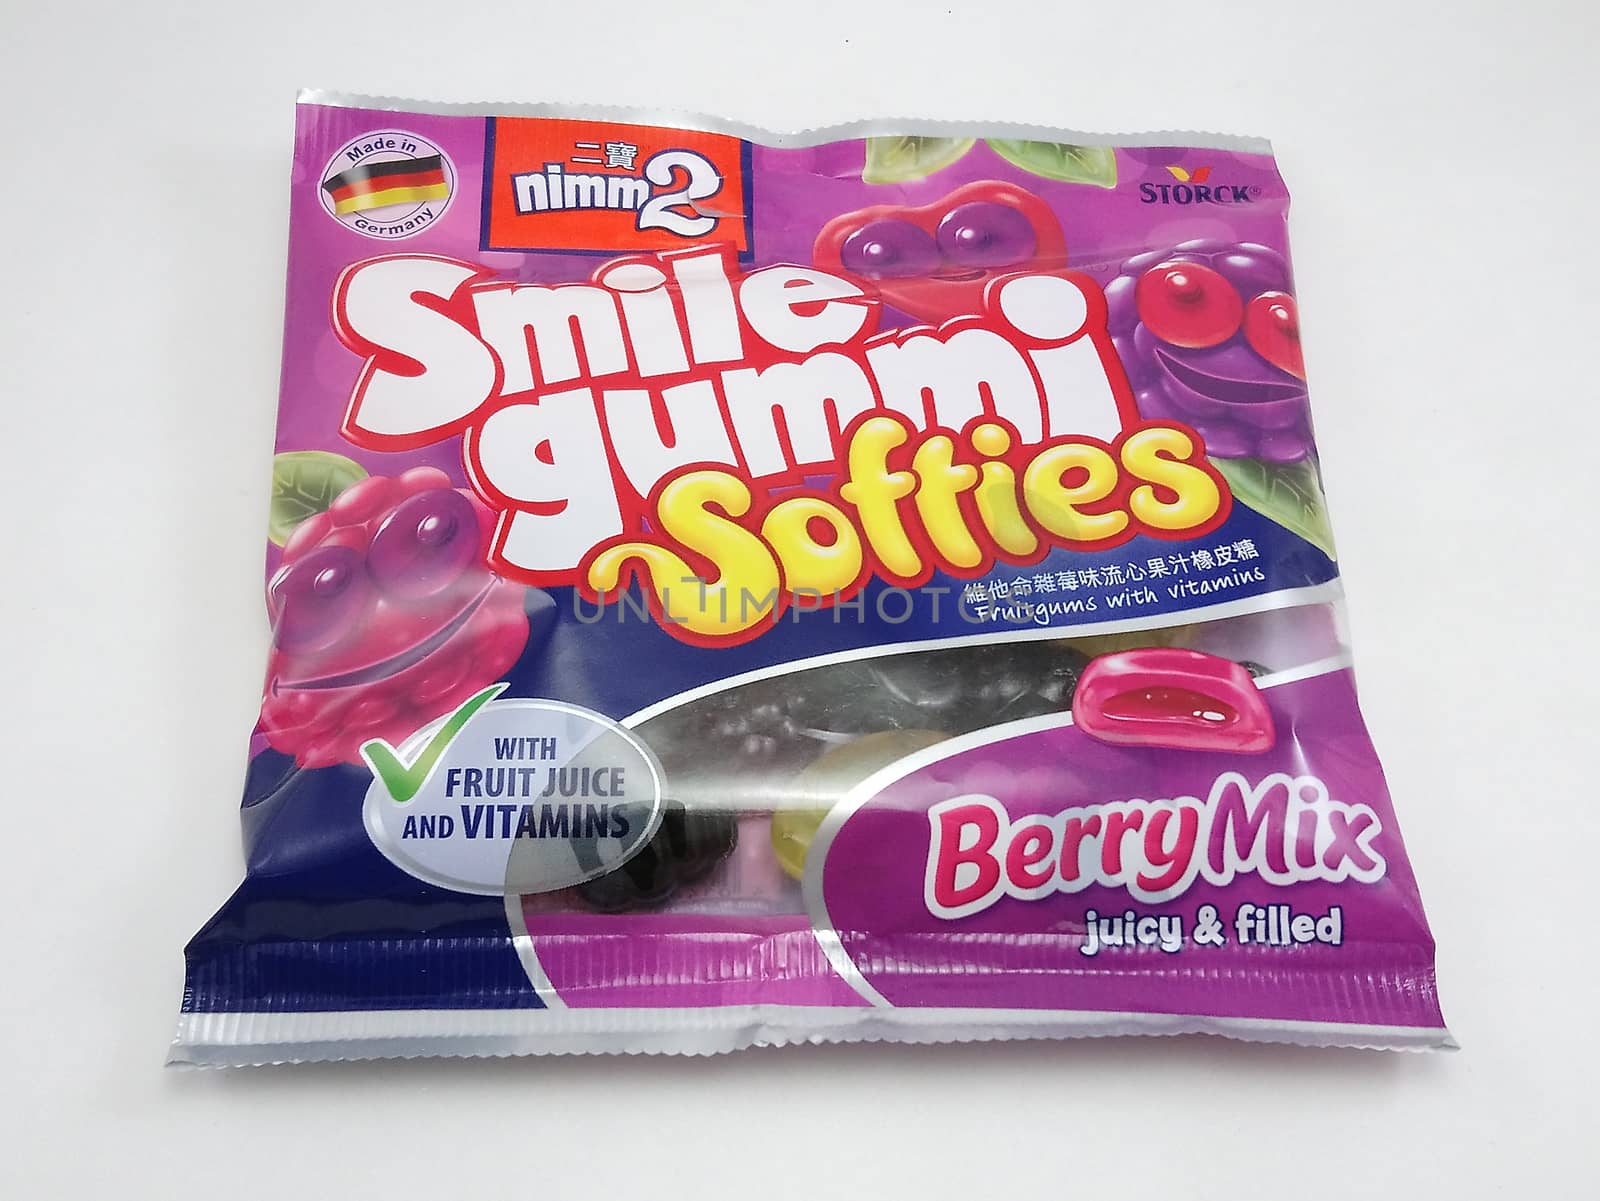 Smile gummi softies berry mix in Manila, Philippines by imwaltersy